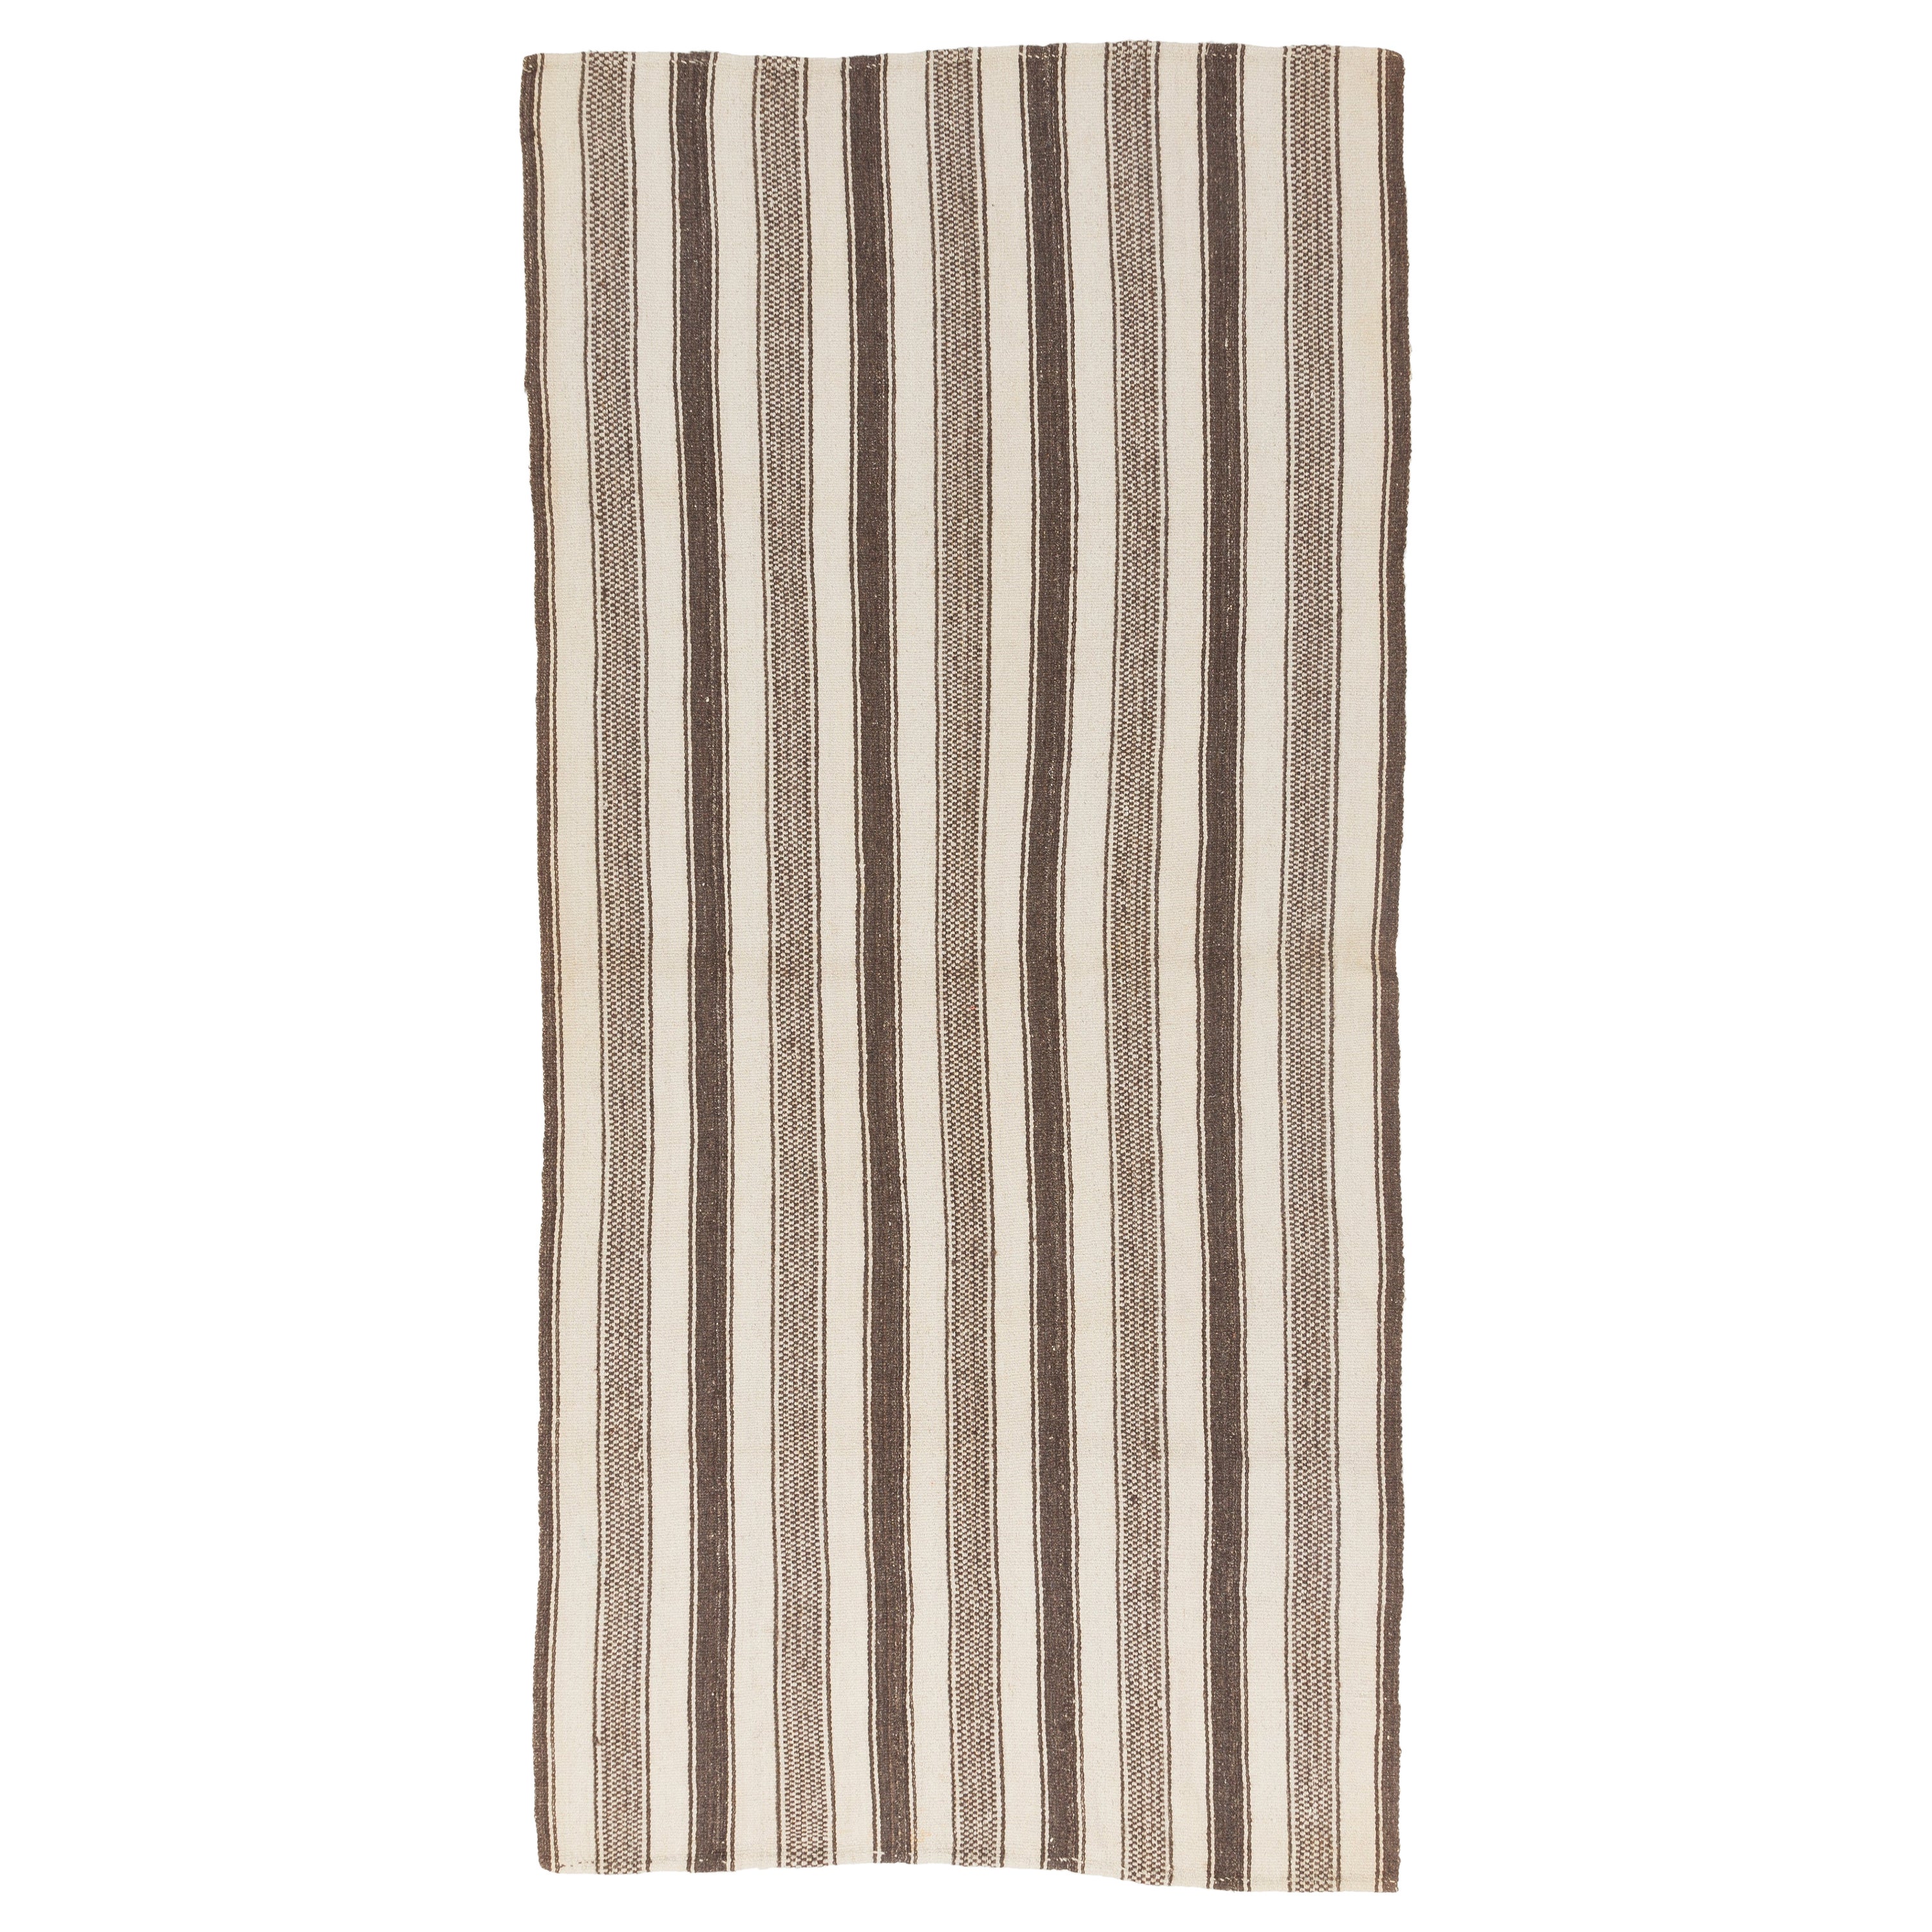 4.4x9.2 Ft Vintage Striped Turkish Kilim Rug Made of Natural Beige & Brown Wool (tapis turc rayé en laine naturelle beige et brune)